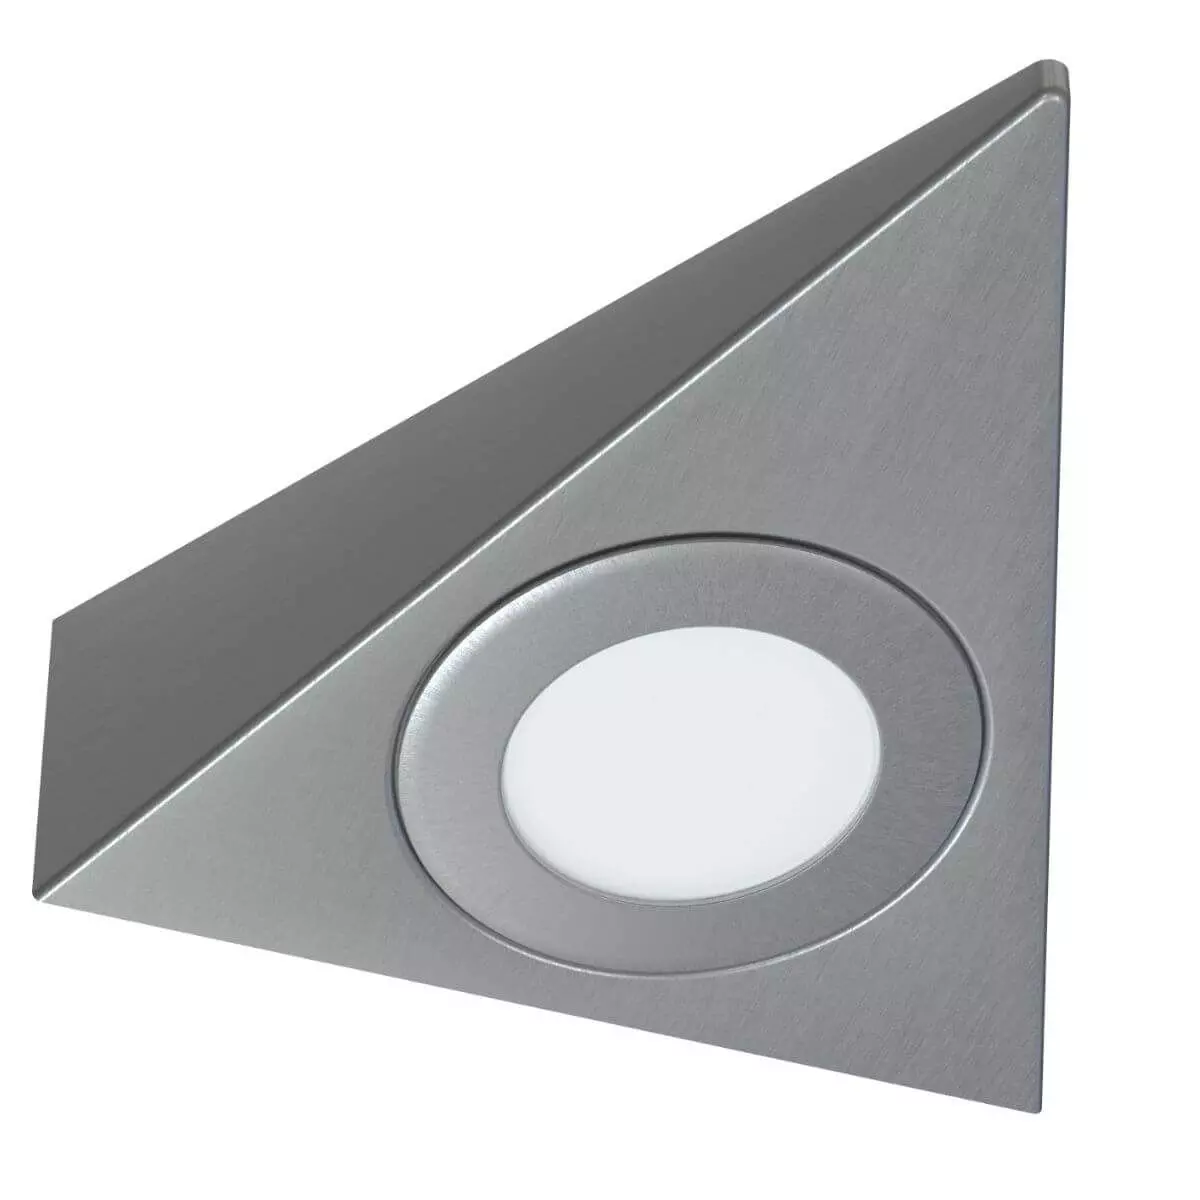 High Brightness LED - Triangle LED Under-Cabinet Light